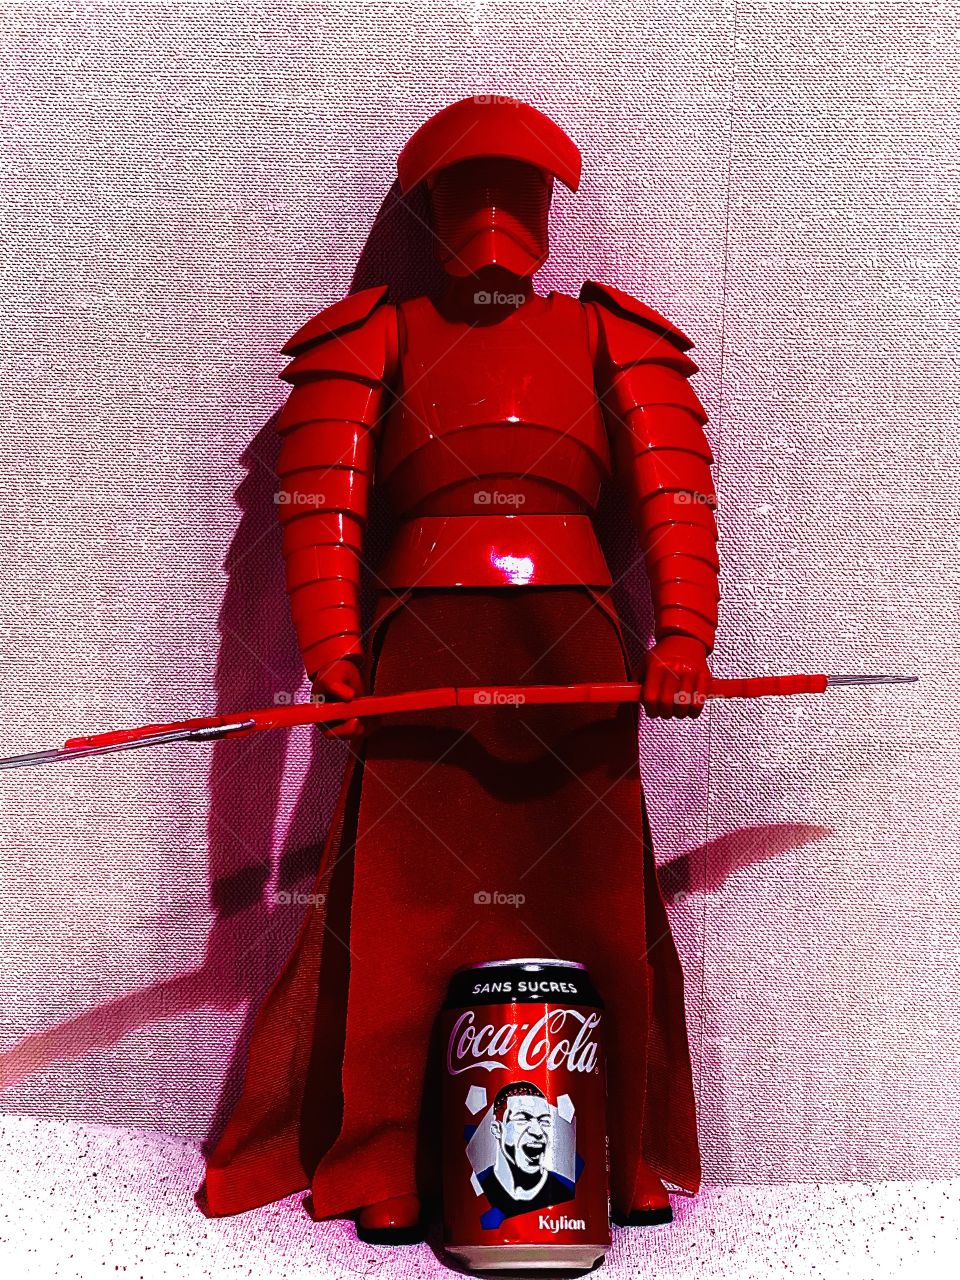 The coca cola protector